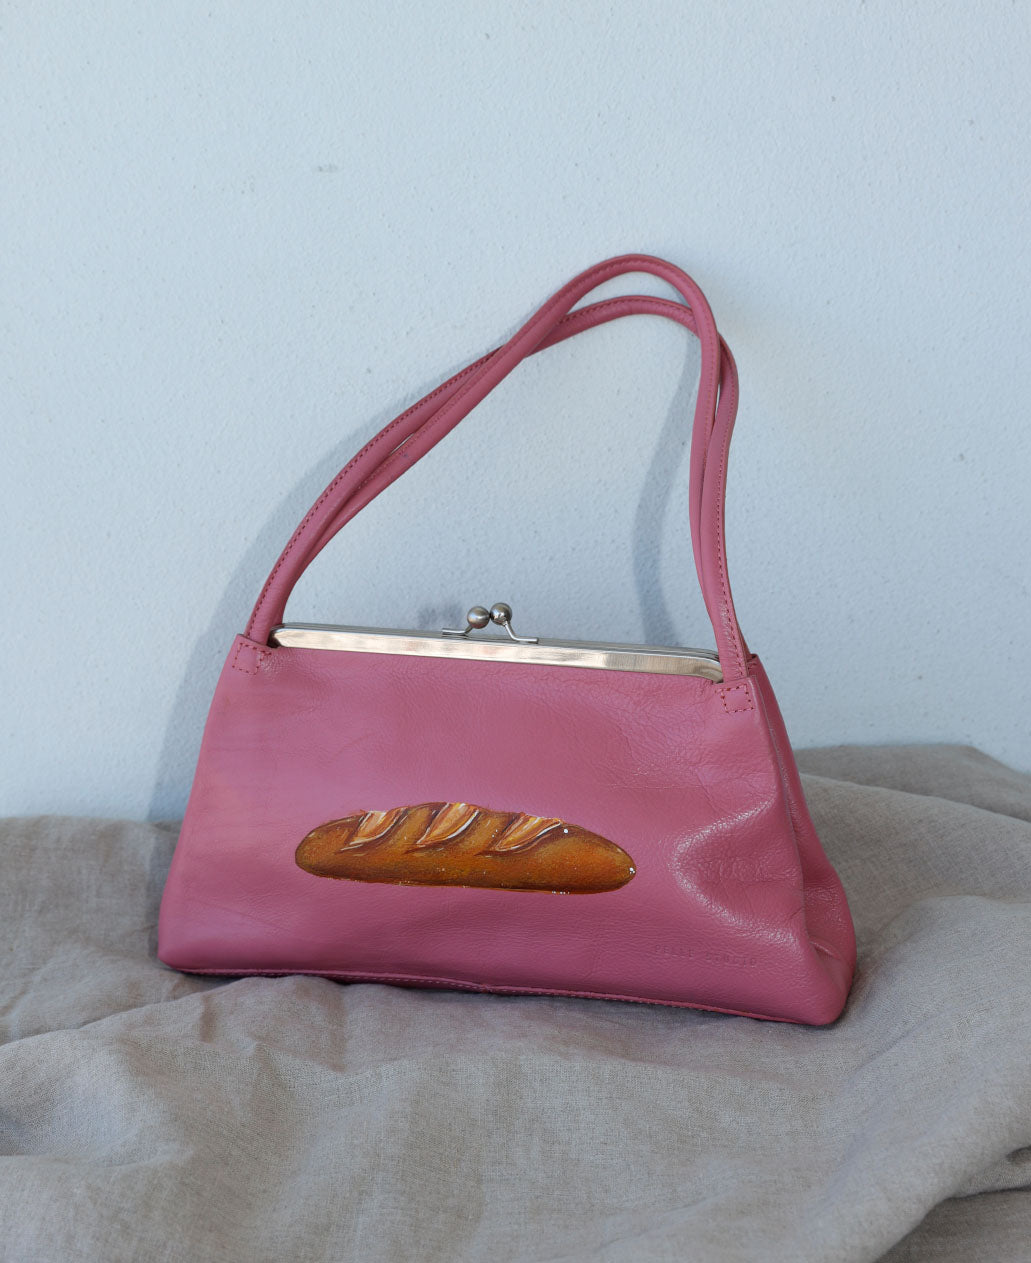 Hand-painted Baguette Bag